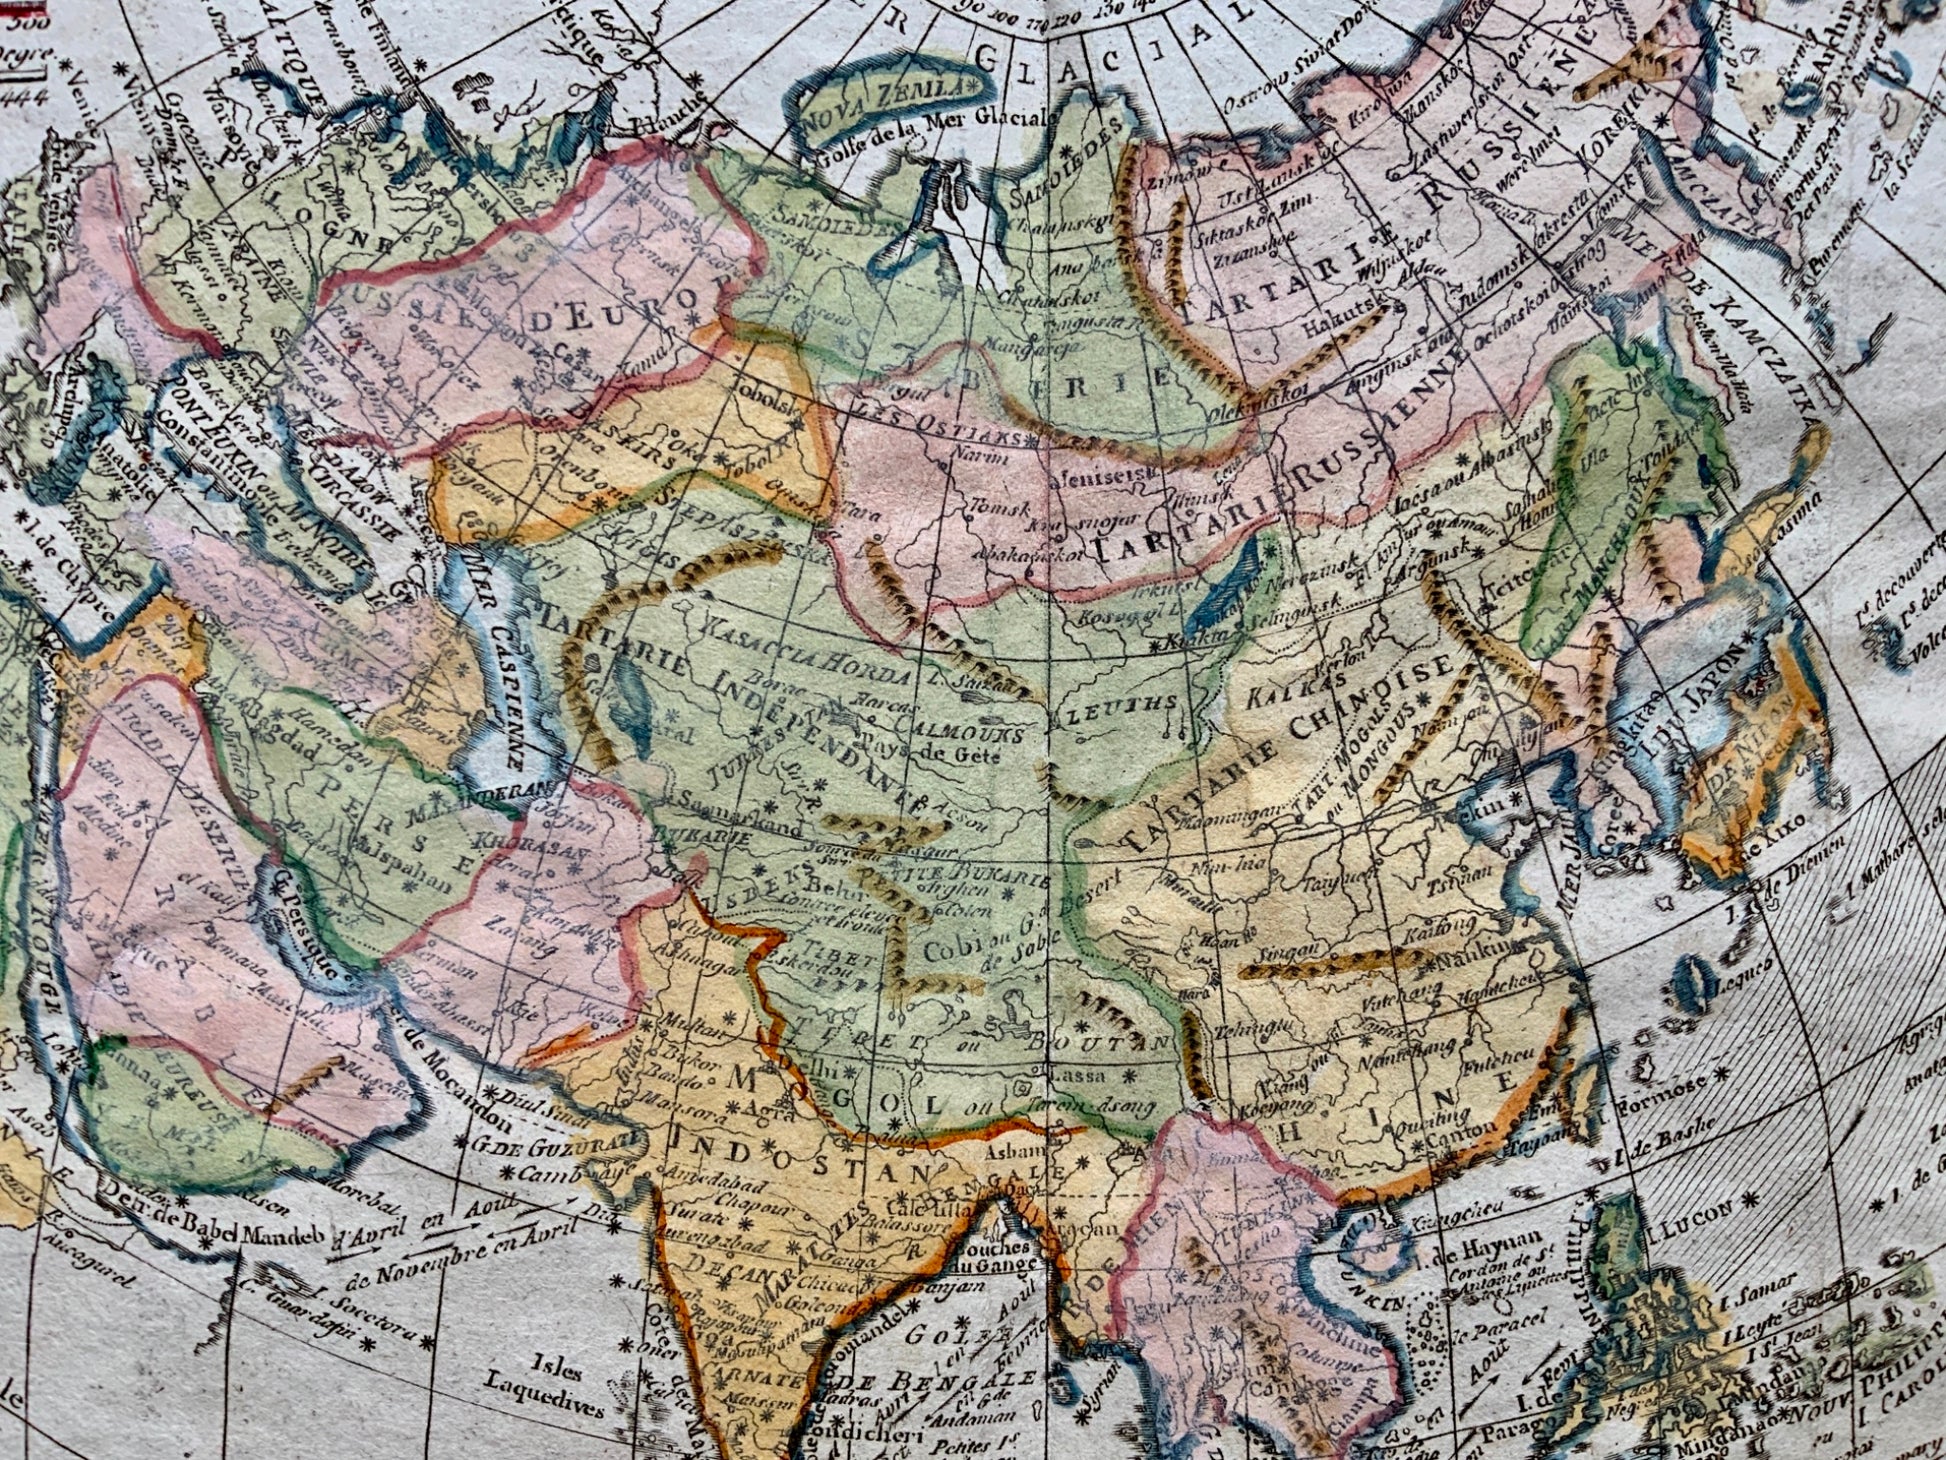 1780 Bonne - ASIA China, Russia, Siberia, India - hand coloured engraved map